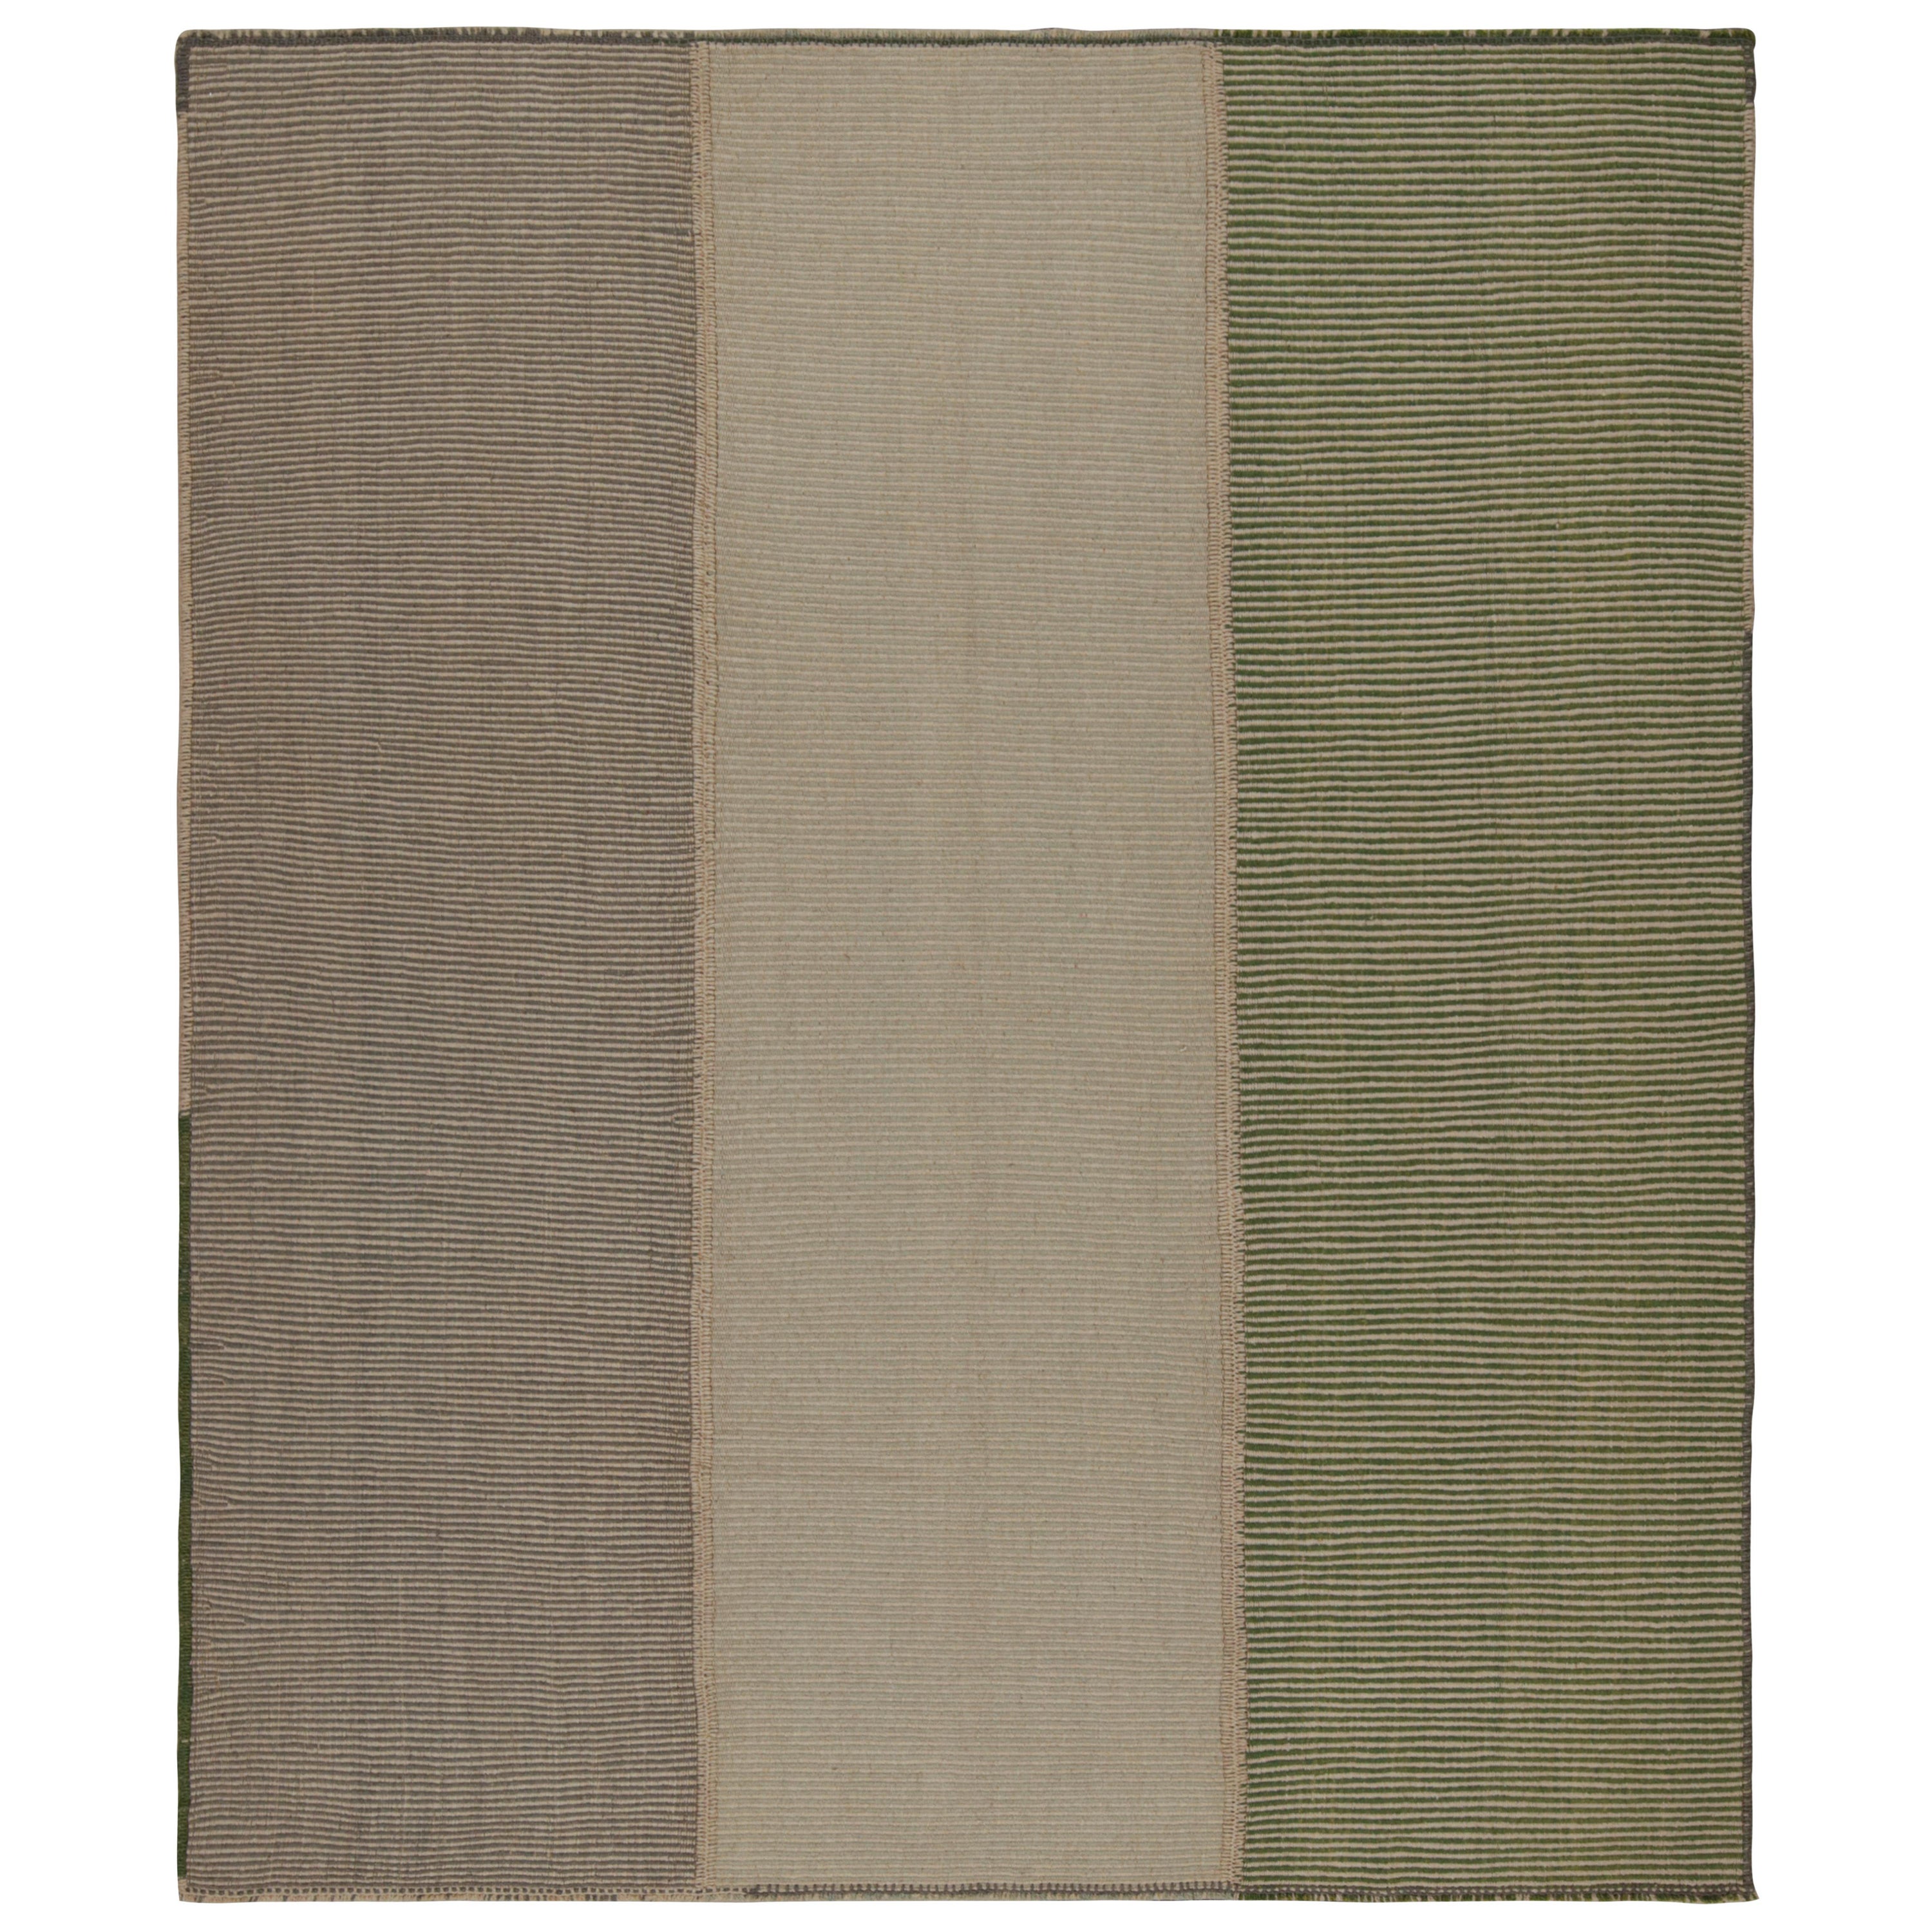 Rug & Kilim’s Modern Kilim Rug in Beige-Brown & Green Textural Stripes For Sale